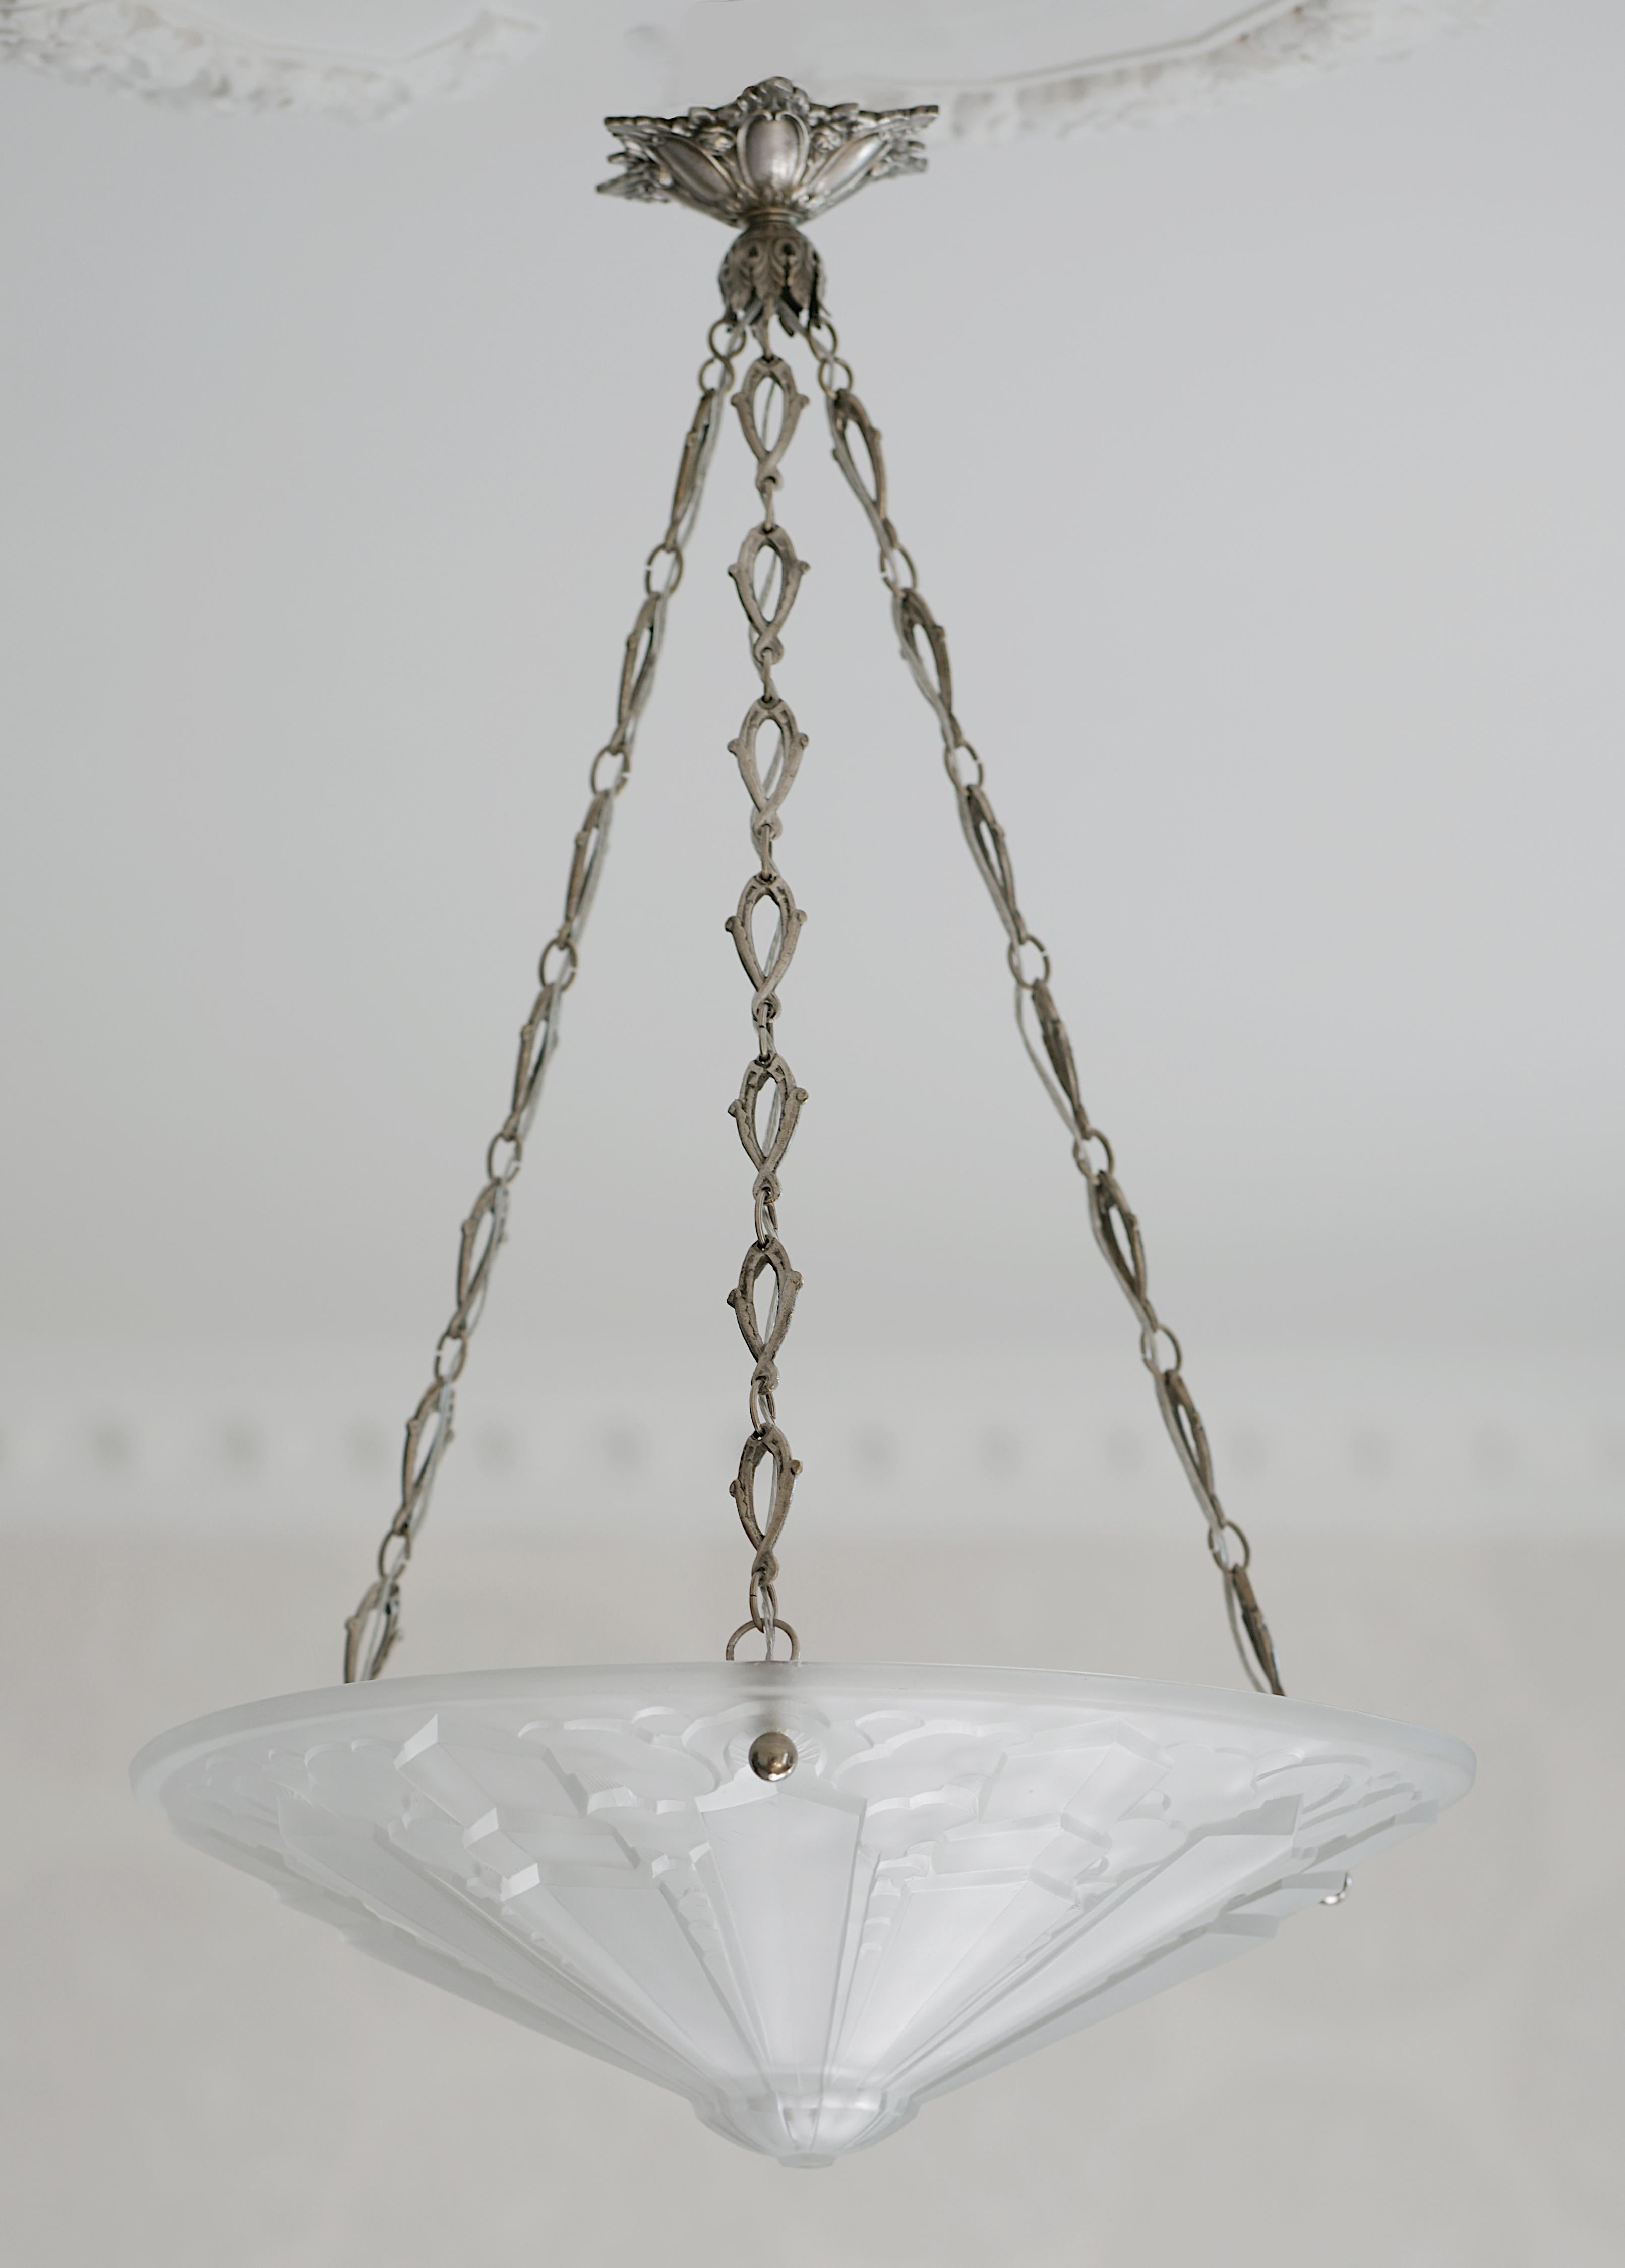 Wide French Art Deco pendant chandelier by Société d'Exploitation des Verreries de Bagneaux, 7 rue de Surène, Paris, France, ca.1925. Frosted molded glass shade hung at its original silverplated brass fixture. Height : 24.4